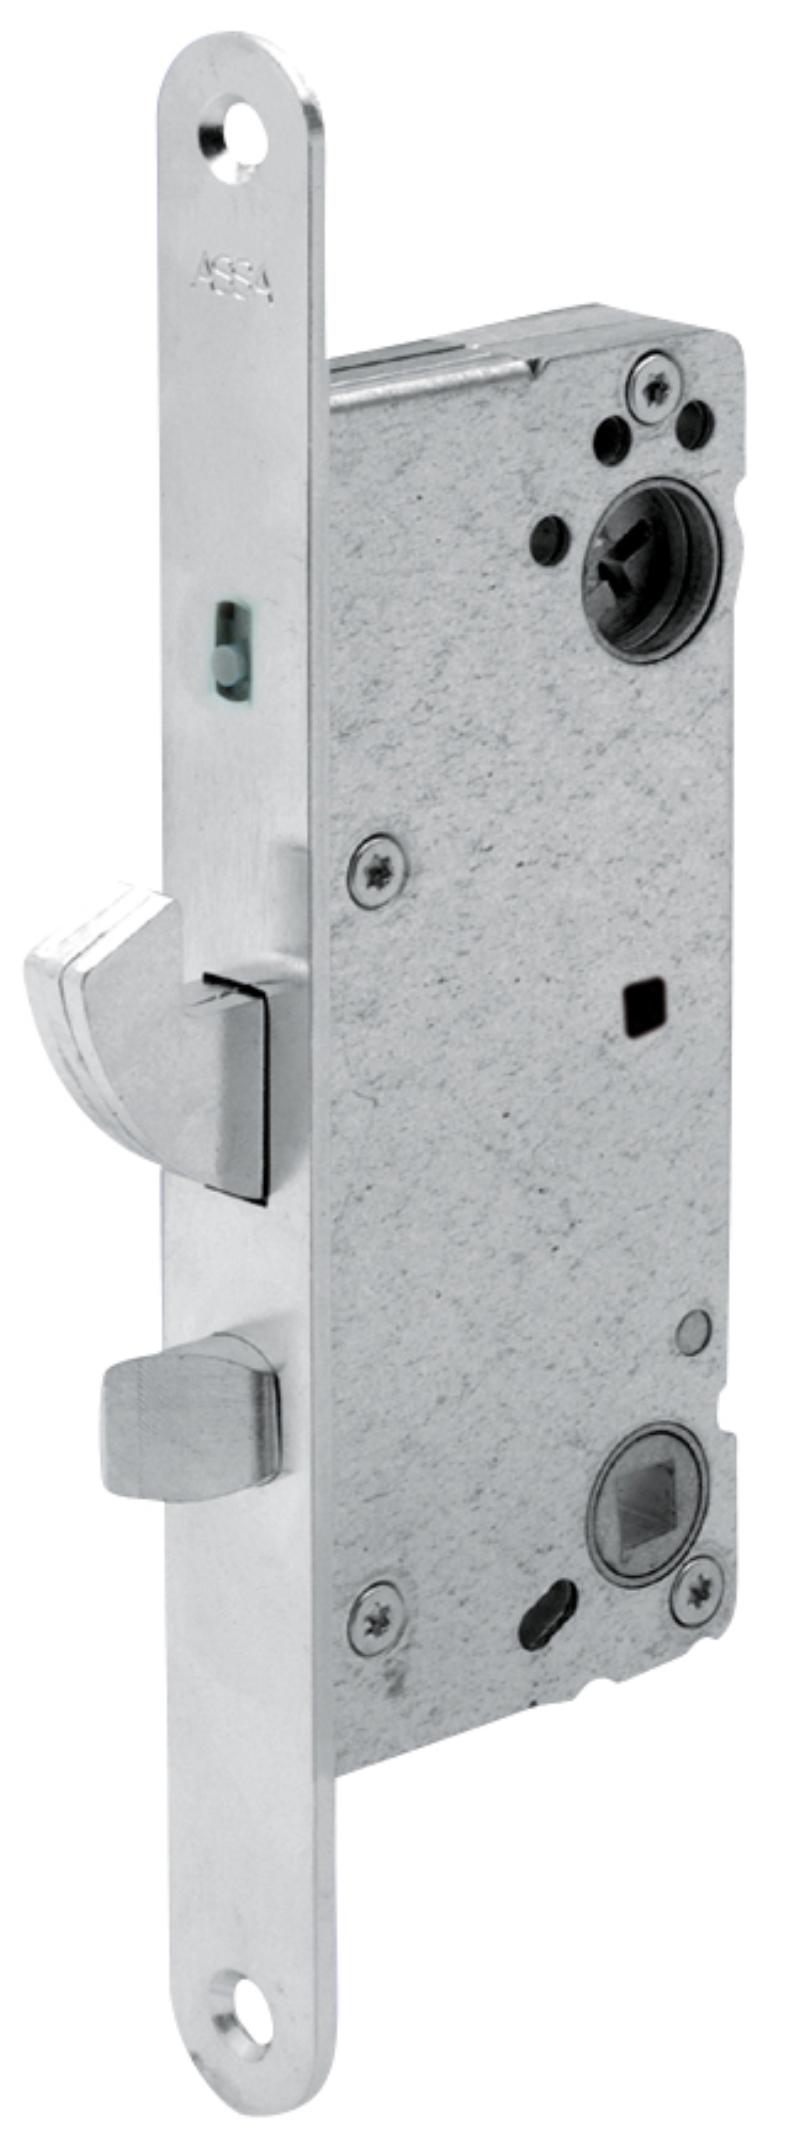 Assa locking box Connect 2002-50H reversible (968780)